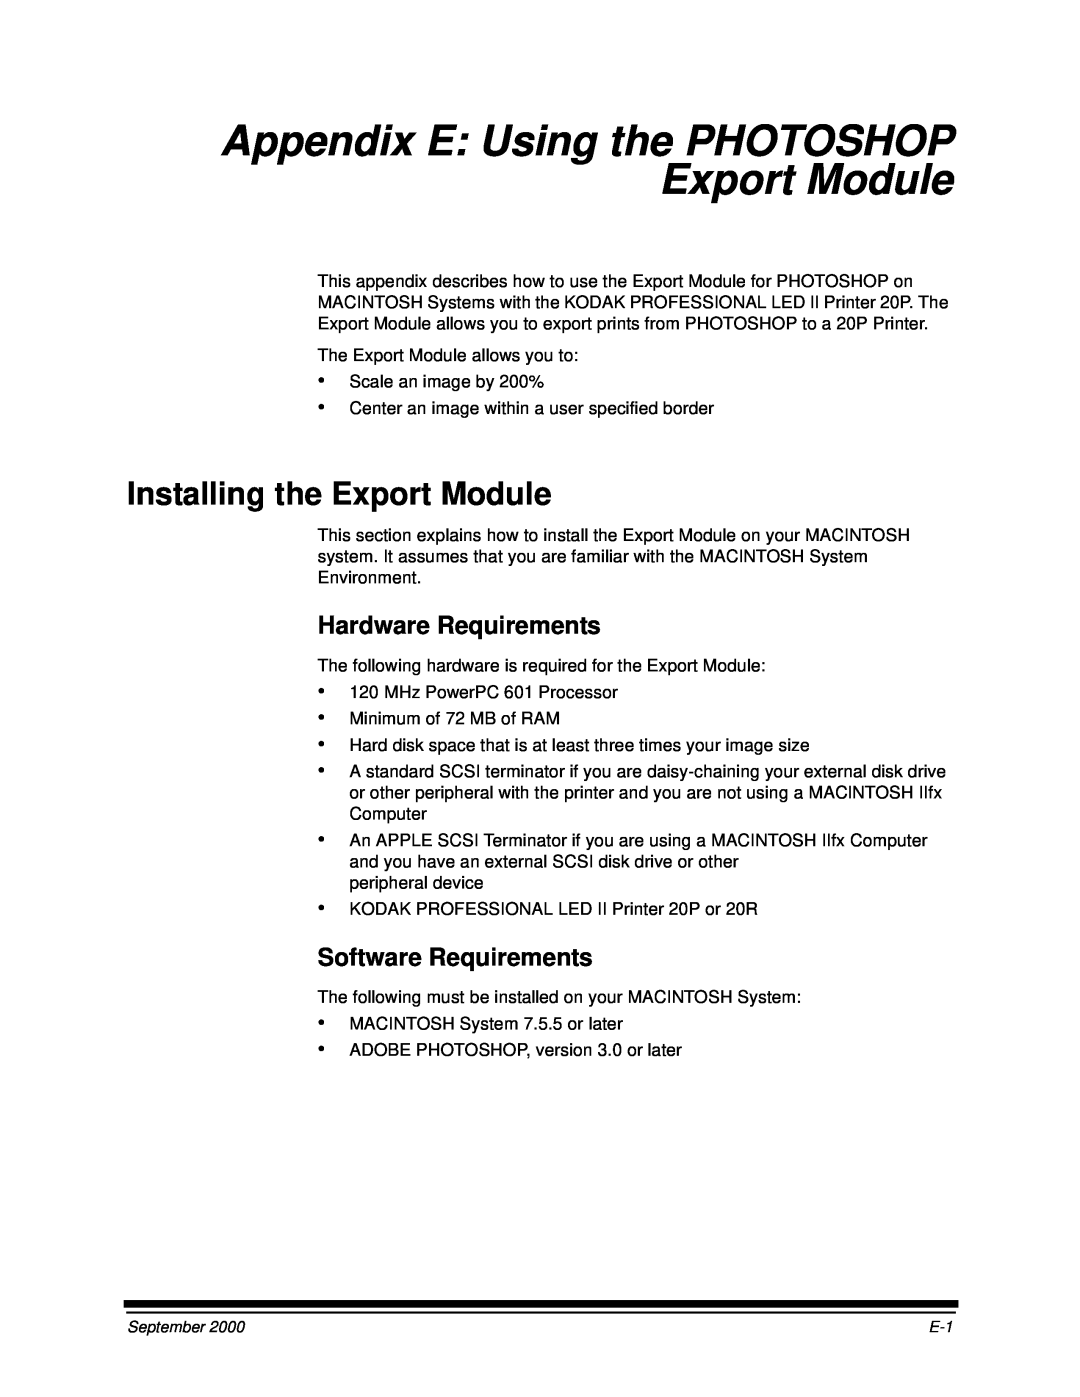 Kodak 20P manual Appendix E: Using the PHOTOSHOP Export Module, Installing the Export Module, Hardware Requirements 